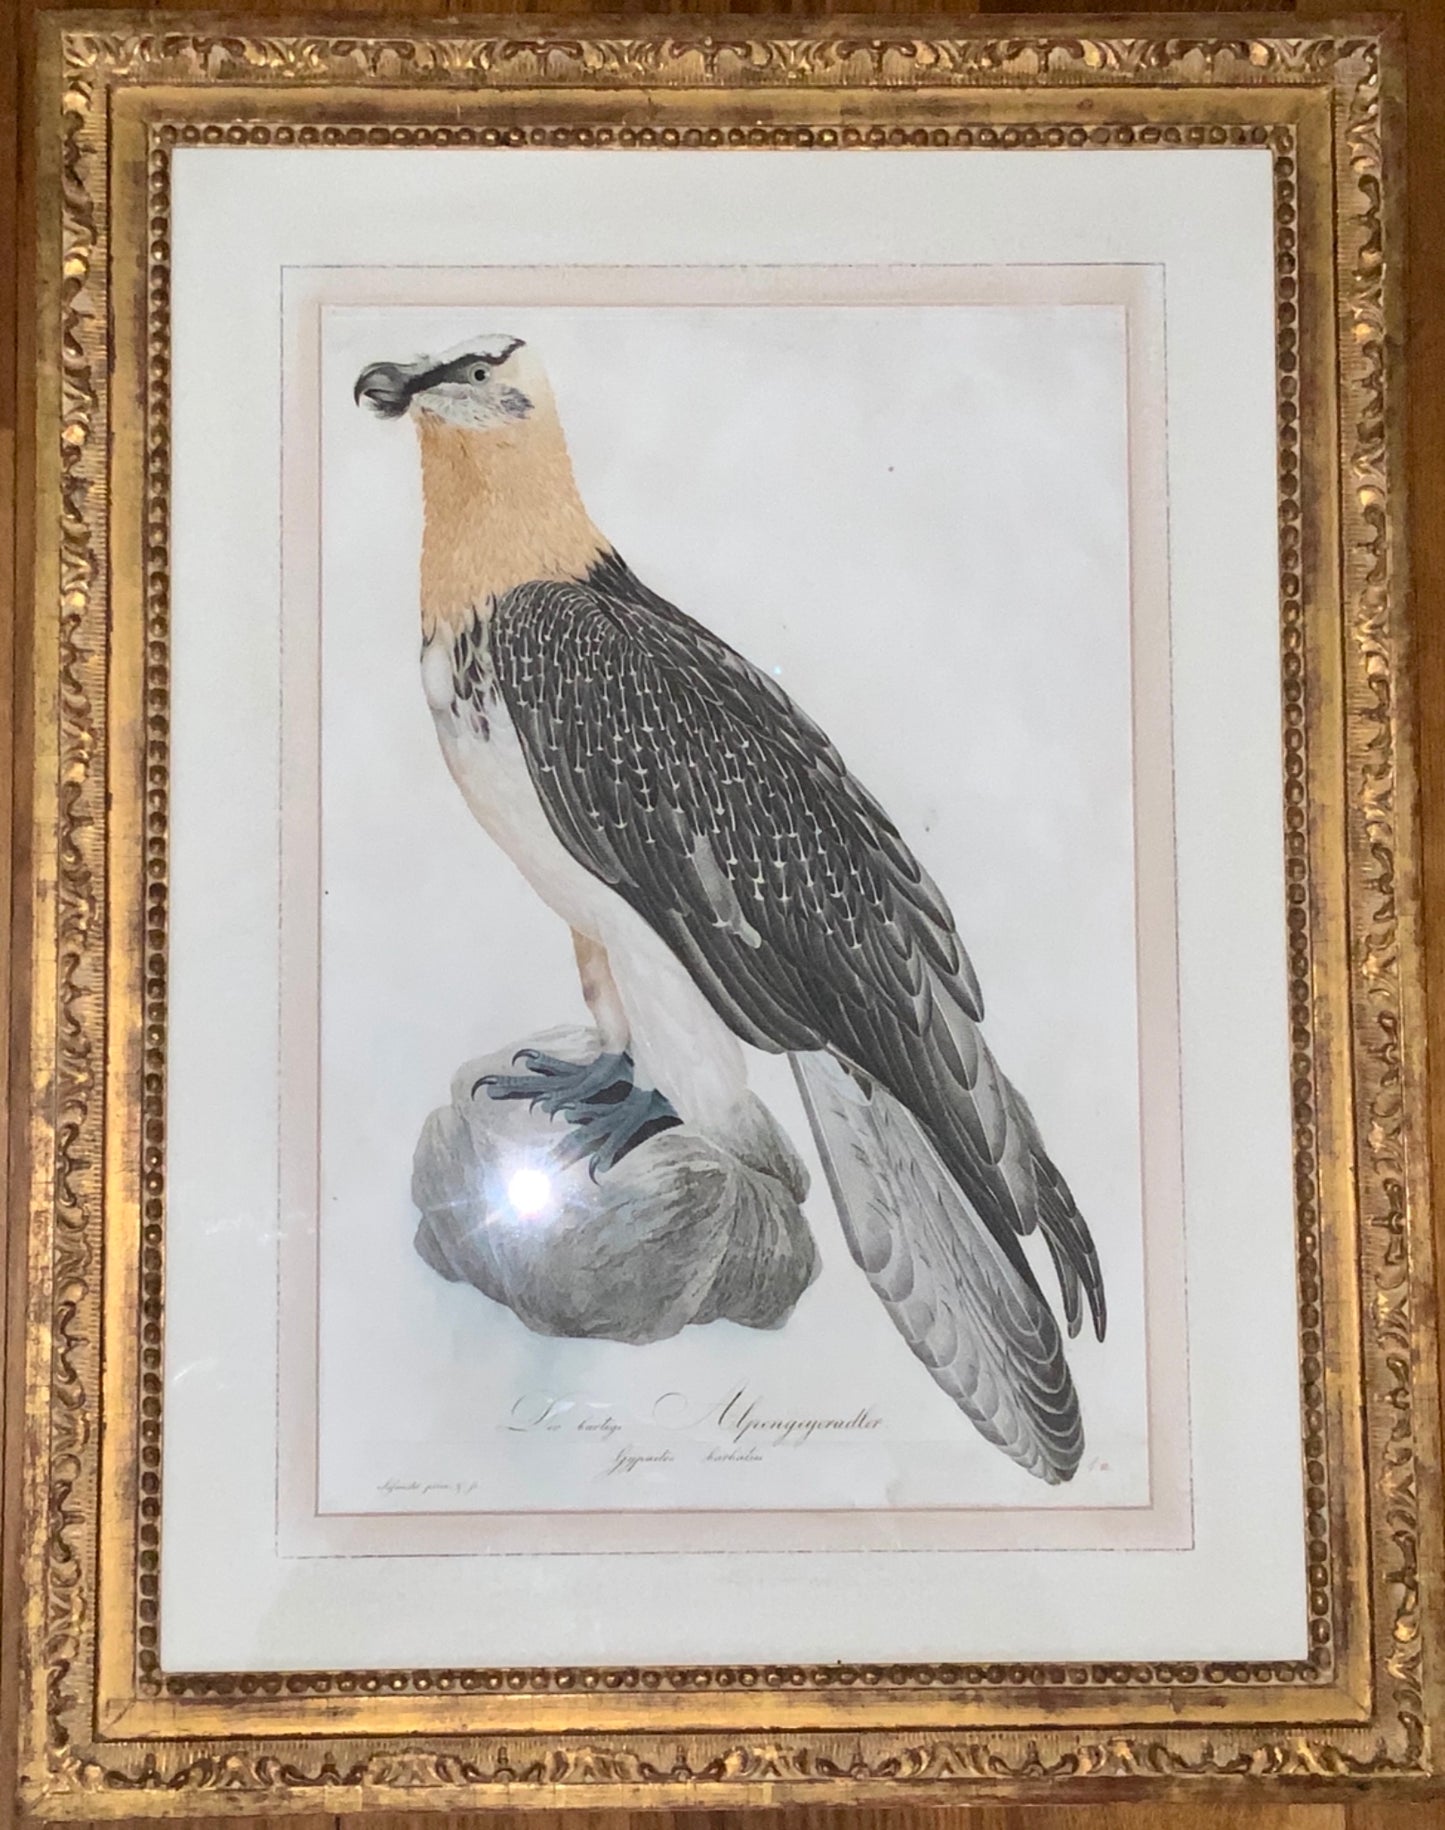 1800-11 Joh. Th. Susemihl - ALPENGEYER Alpine Eagle - Ornithology - Beautifully framed